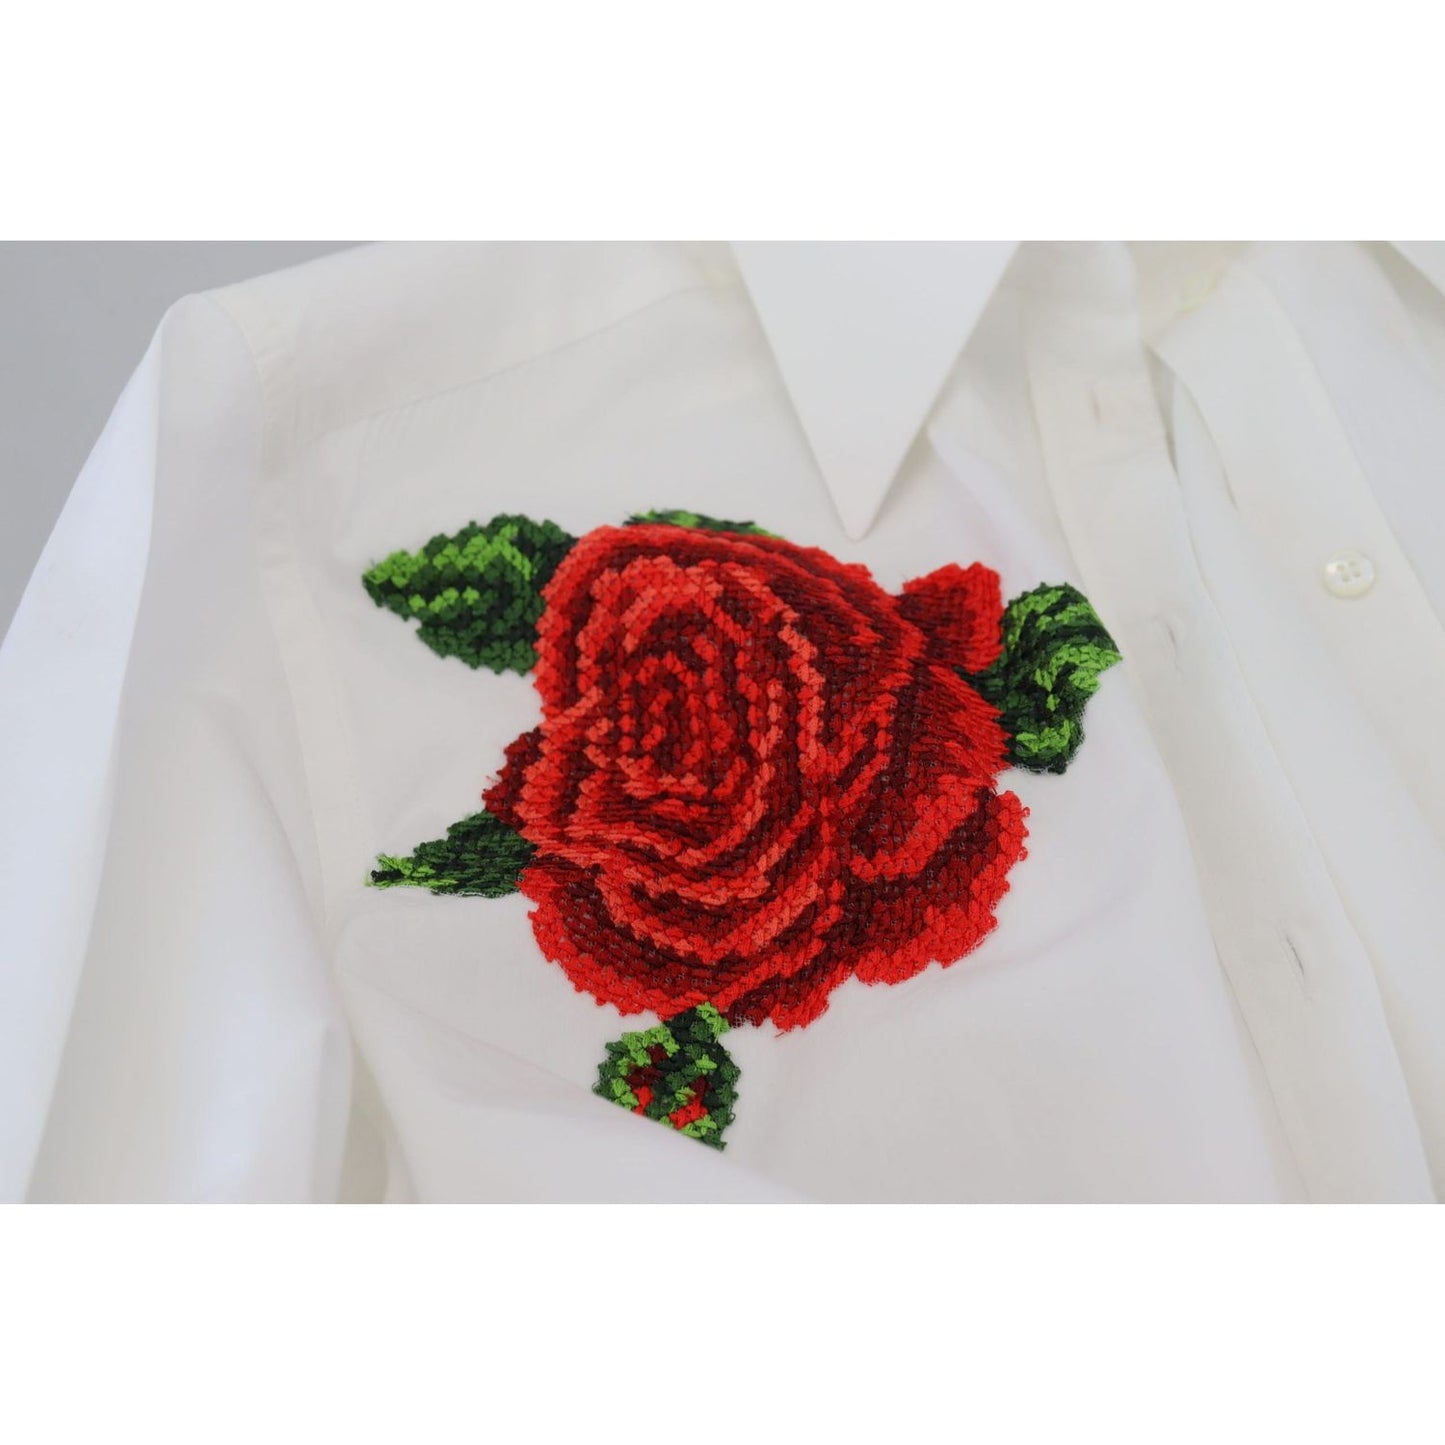 Dolce & Gabbana Elegant Floral Embroidered Silk Blend Shirt white-cotton-flower-embroidery-shirt-top